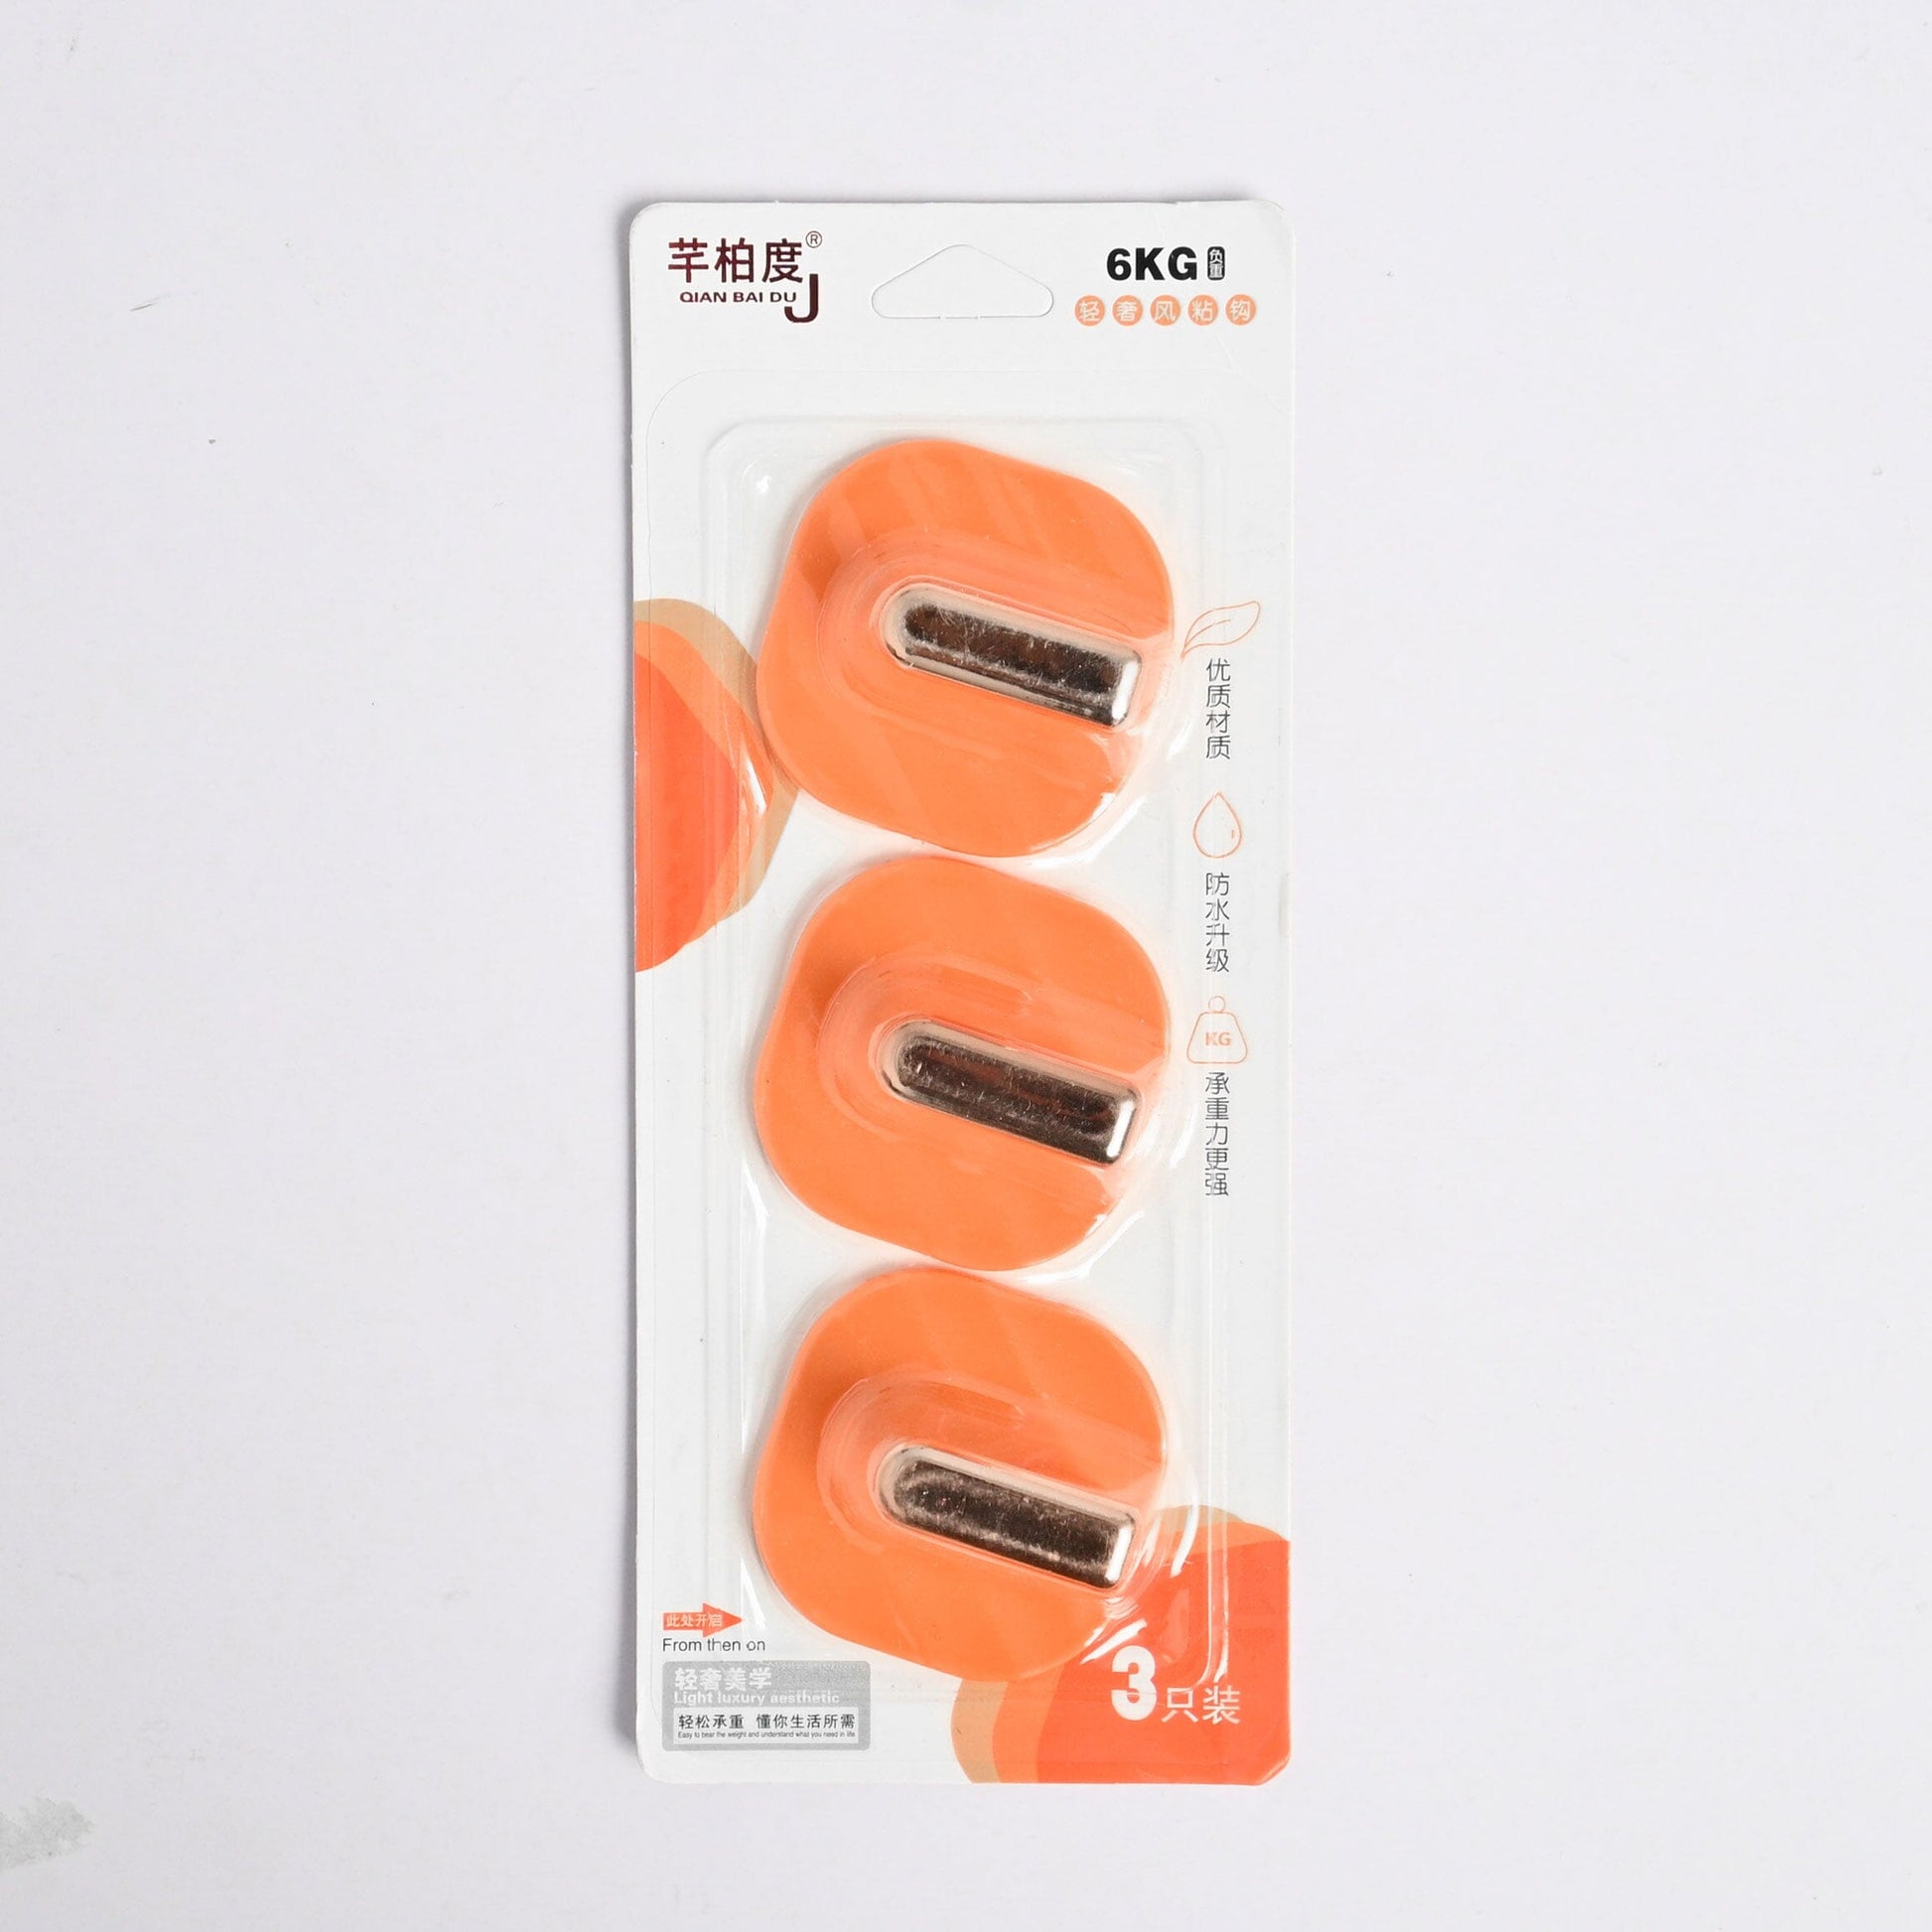 Qian Bai Premium Wall Hooks - Pack Of 3 Home Decor SRL Orange D1 